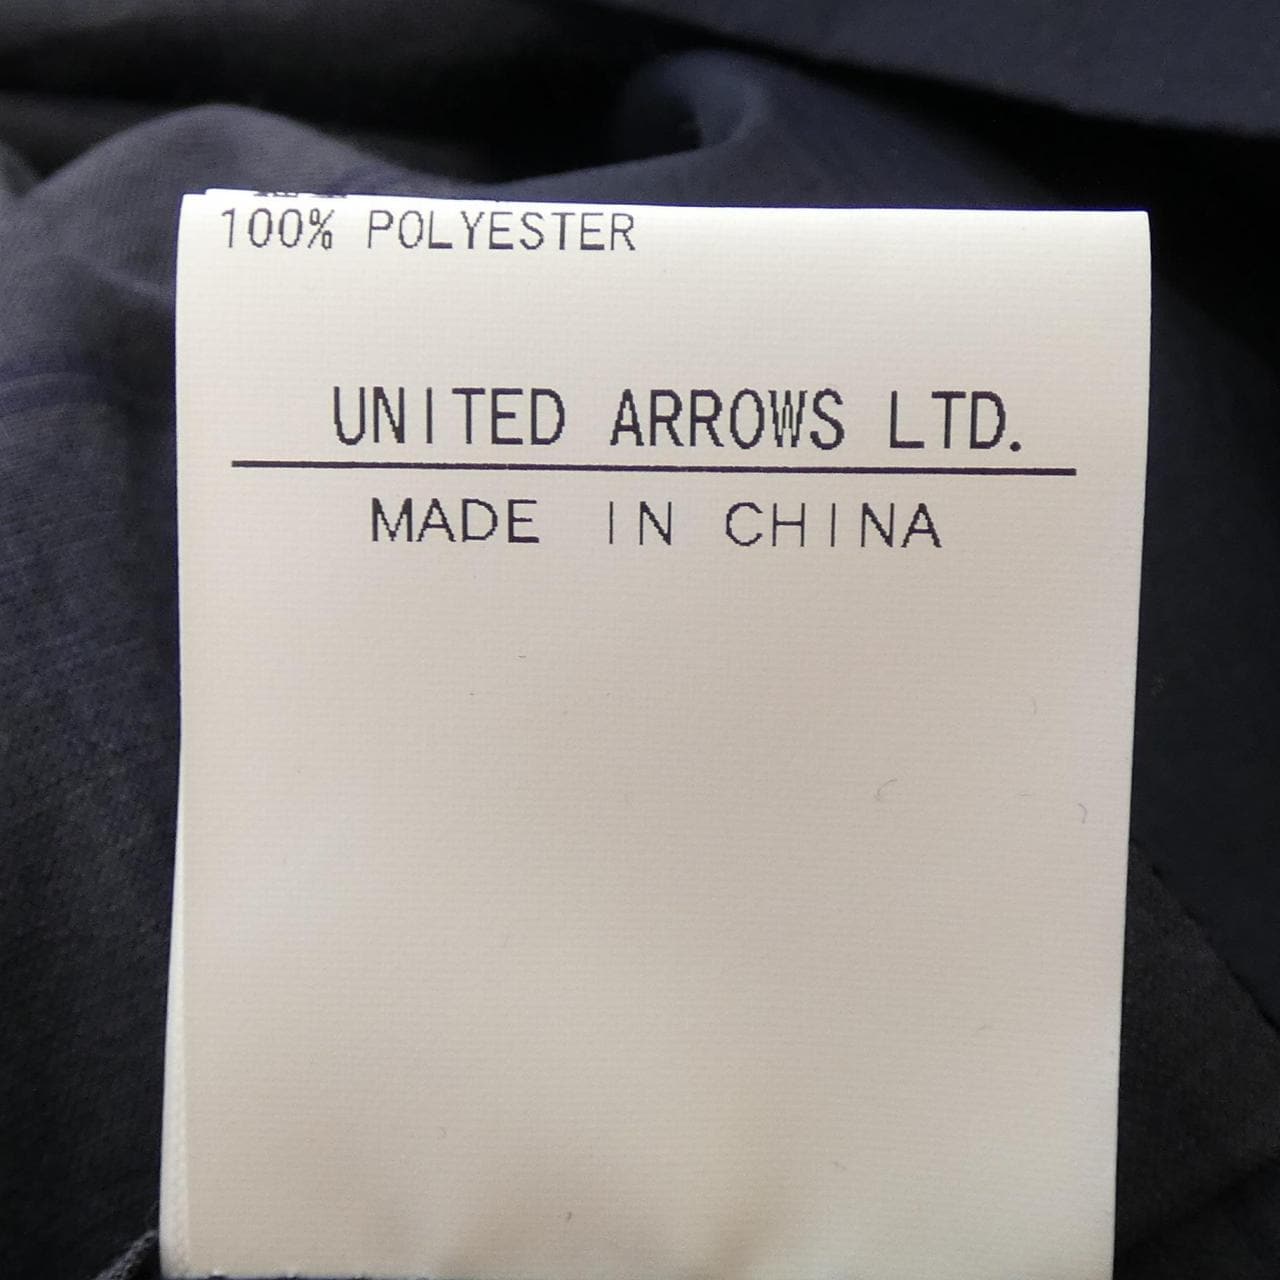 United Arrows UNITED ARROWS coat